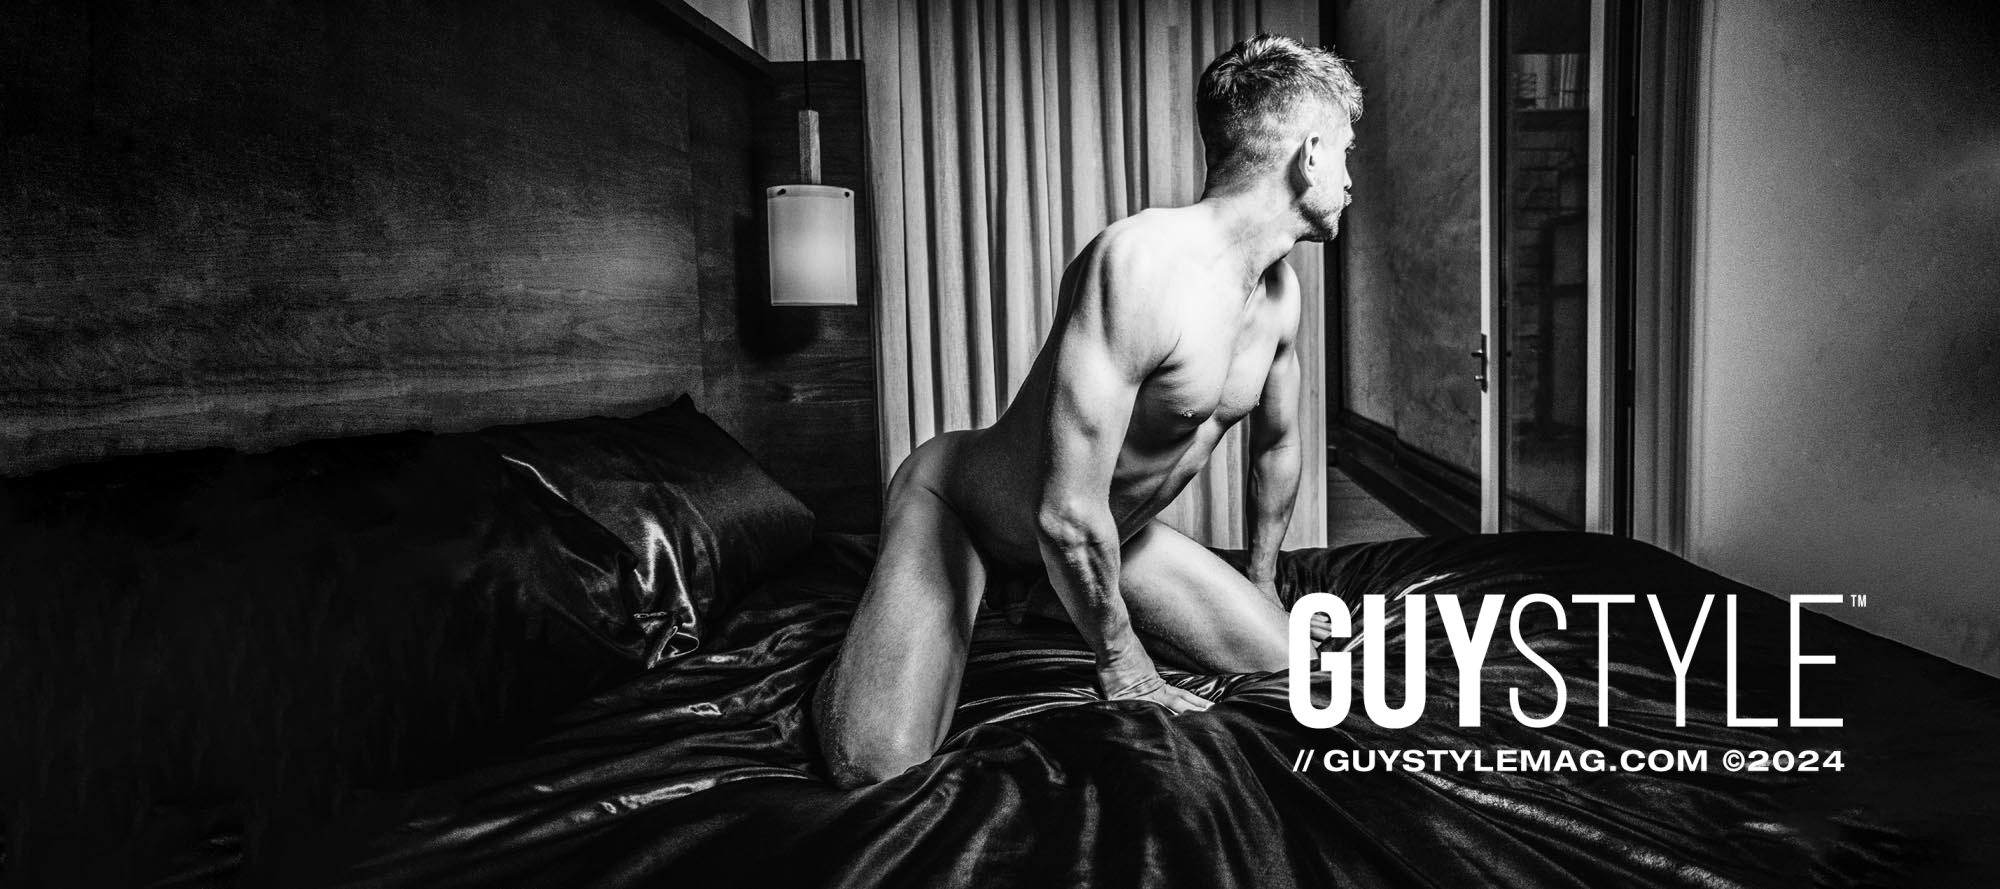 Trevor Dalton for the GUY STYLE MAG – Male Boudoir Photography – Men's Boudoir – Nude Male Magazine – Naked Gay Man – Nude Gay Photography